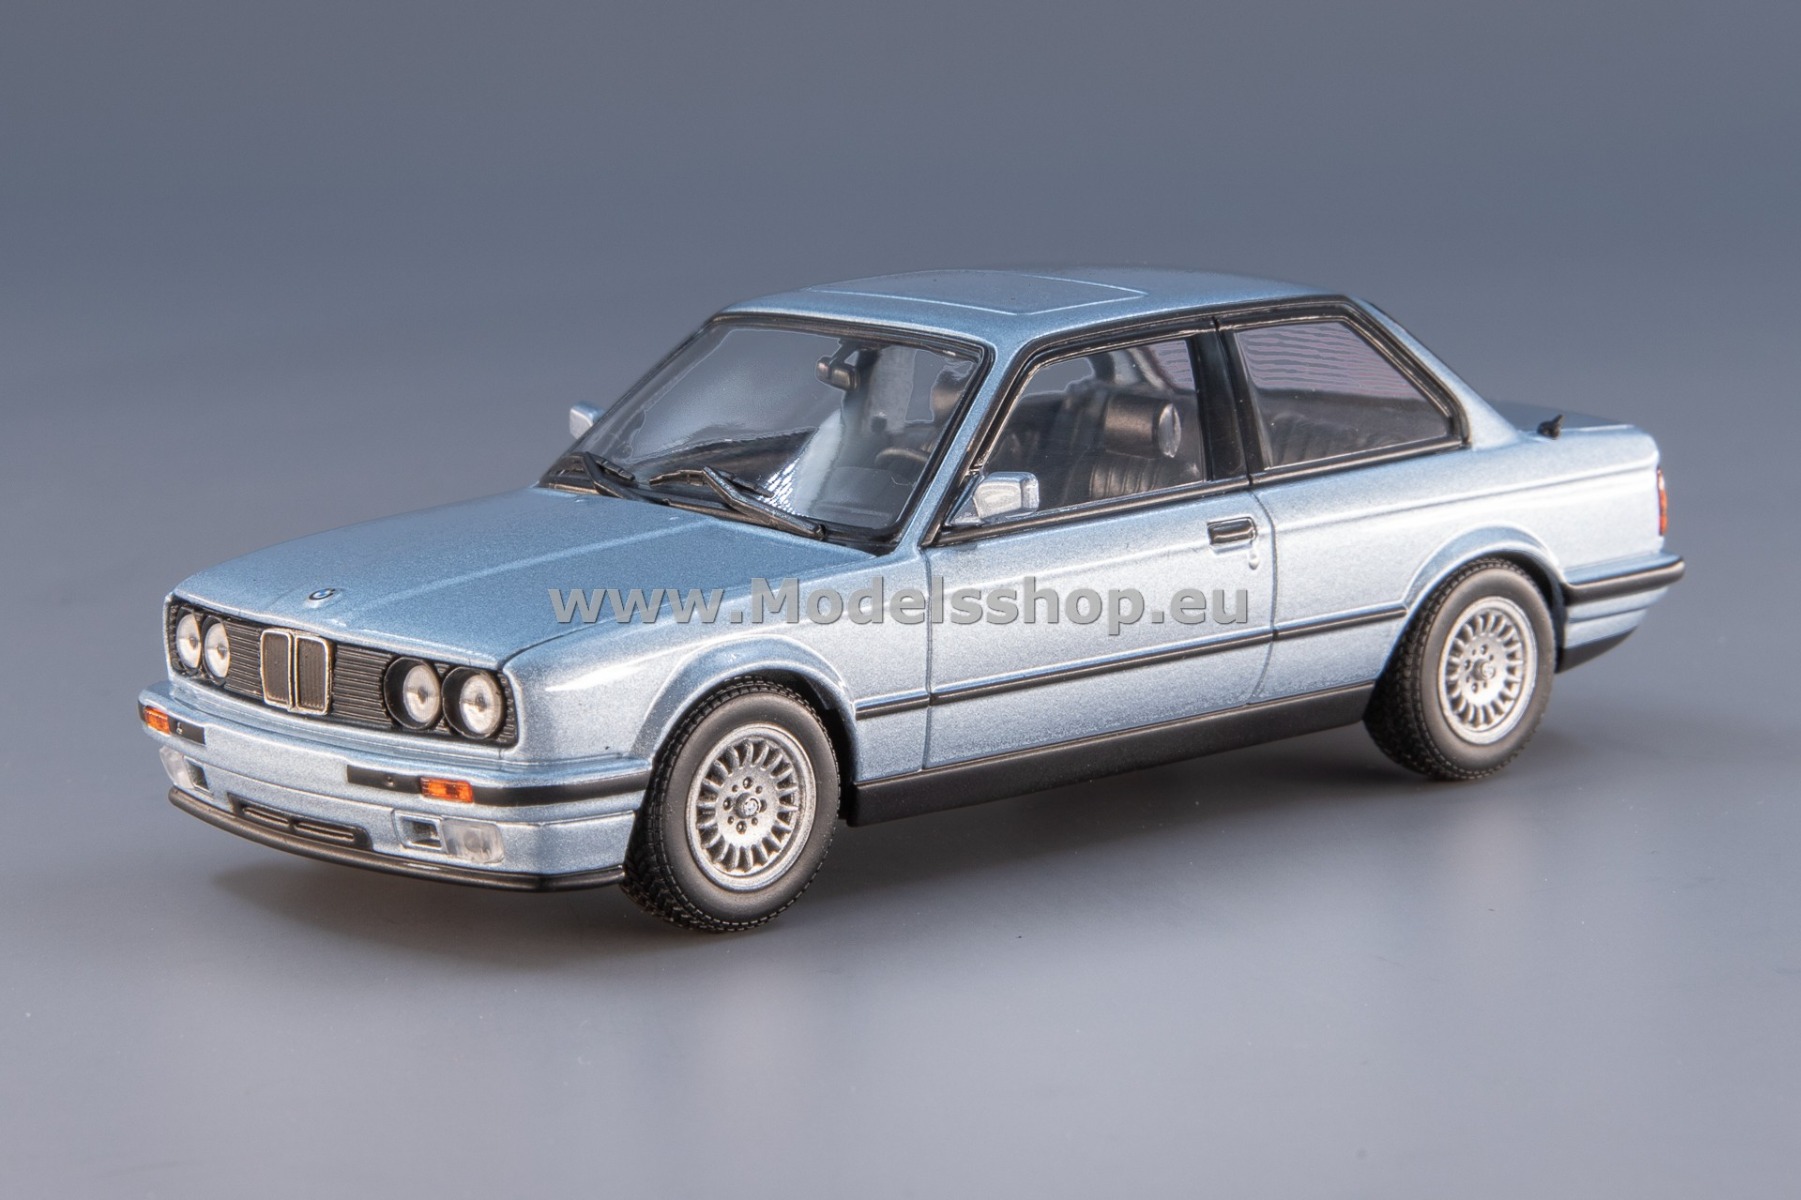 Maxichamps 940024004 BMW 3-Series (E30), 1989 /silver-blue metallic/